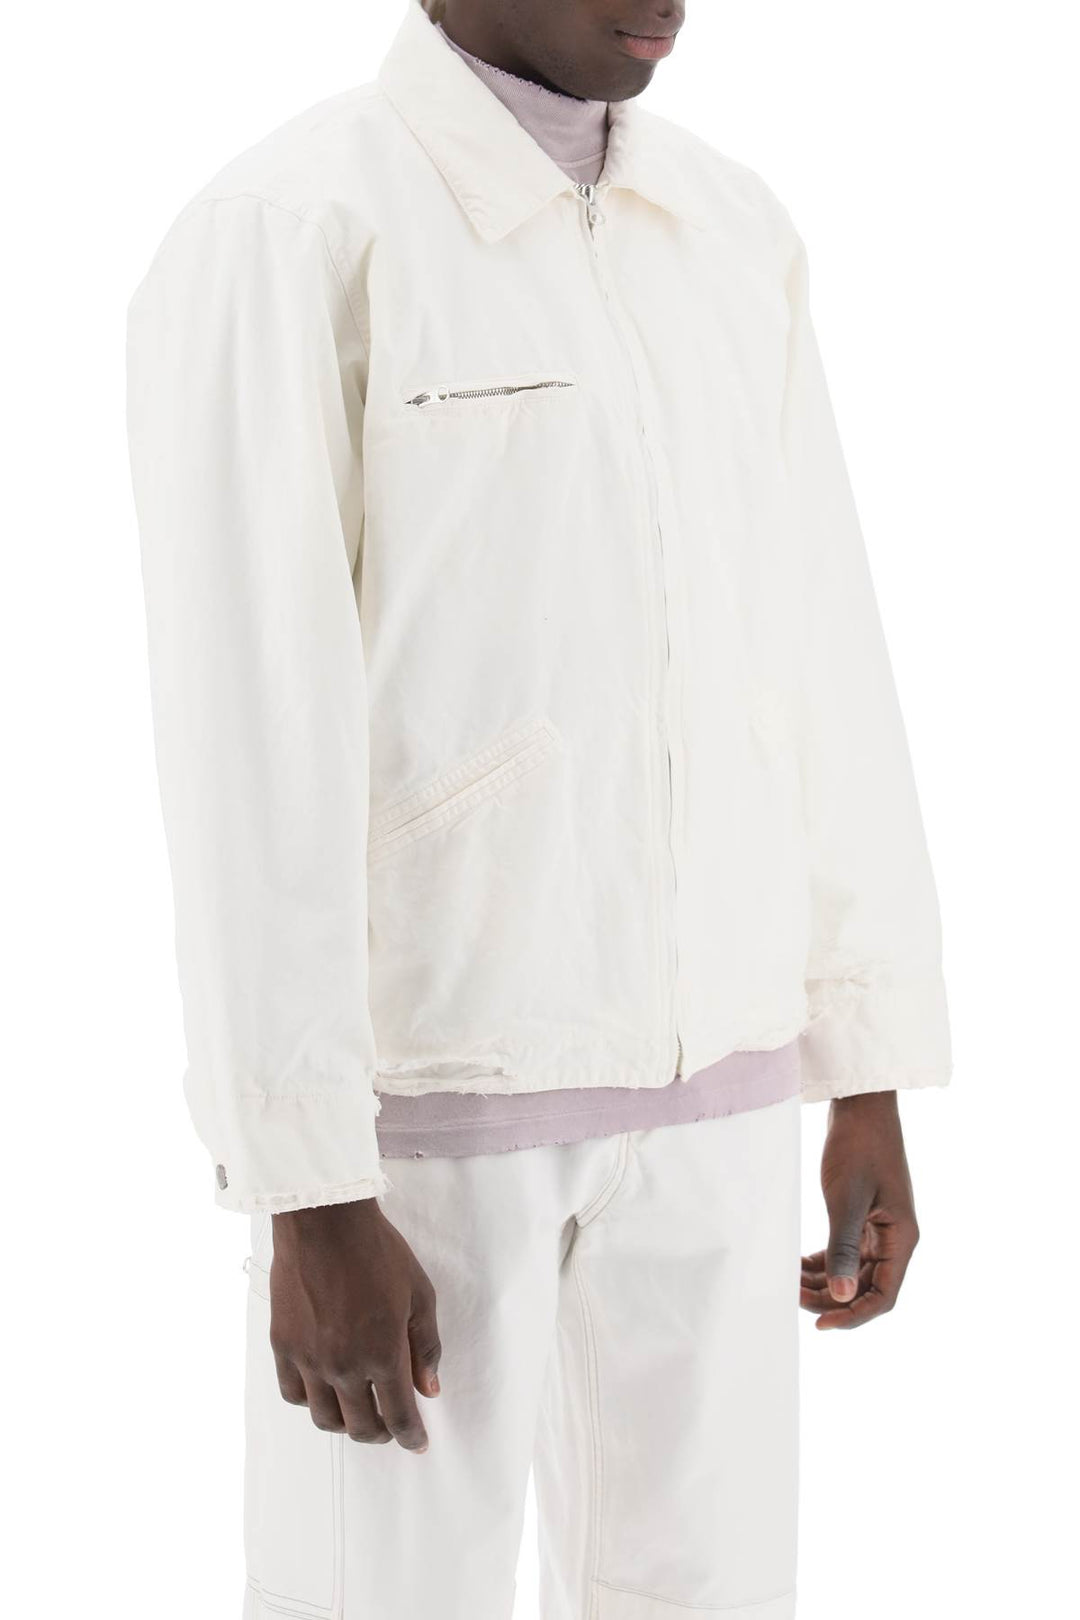 Mm6 Maison Margiela Distressed Cotton Canvas Jacket   Bianco